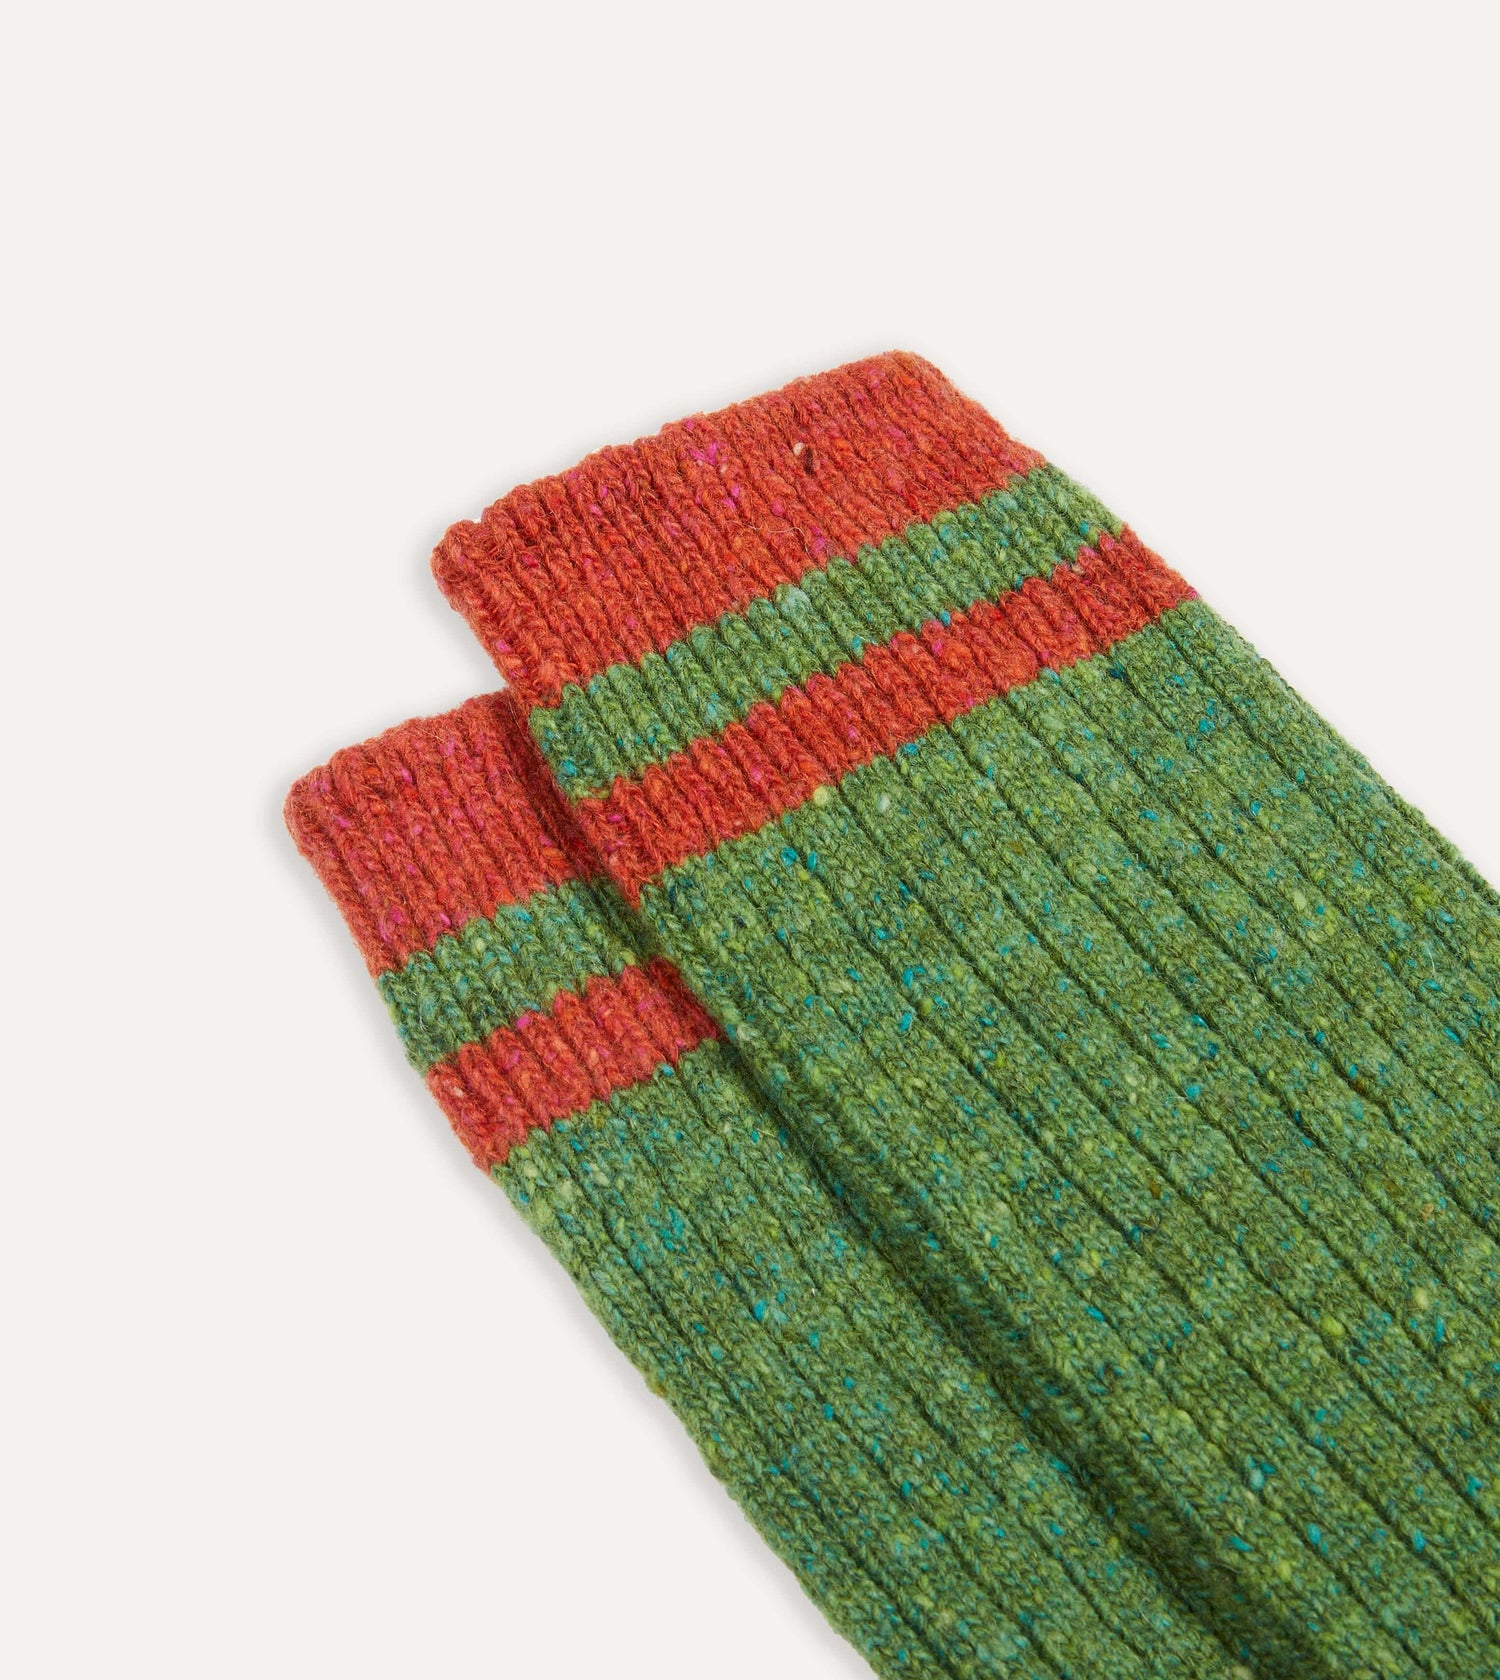 Green Striped Donegal Wool Socks